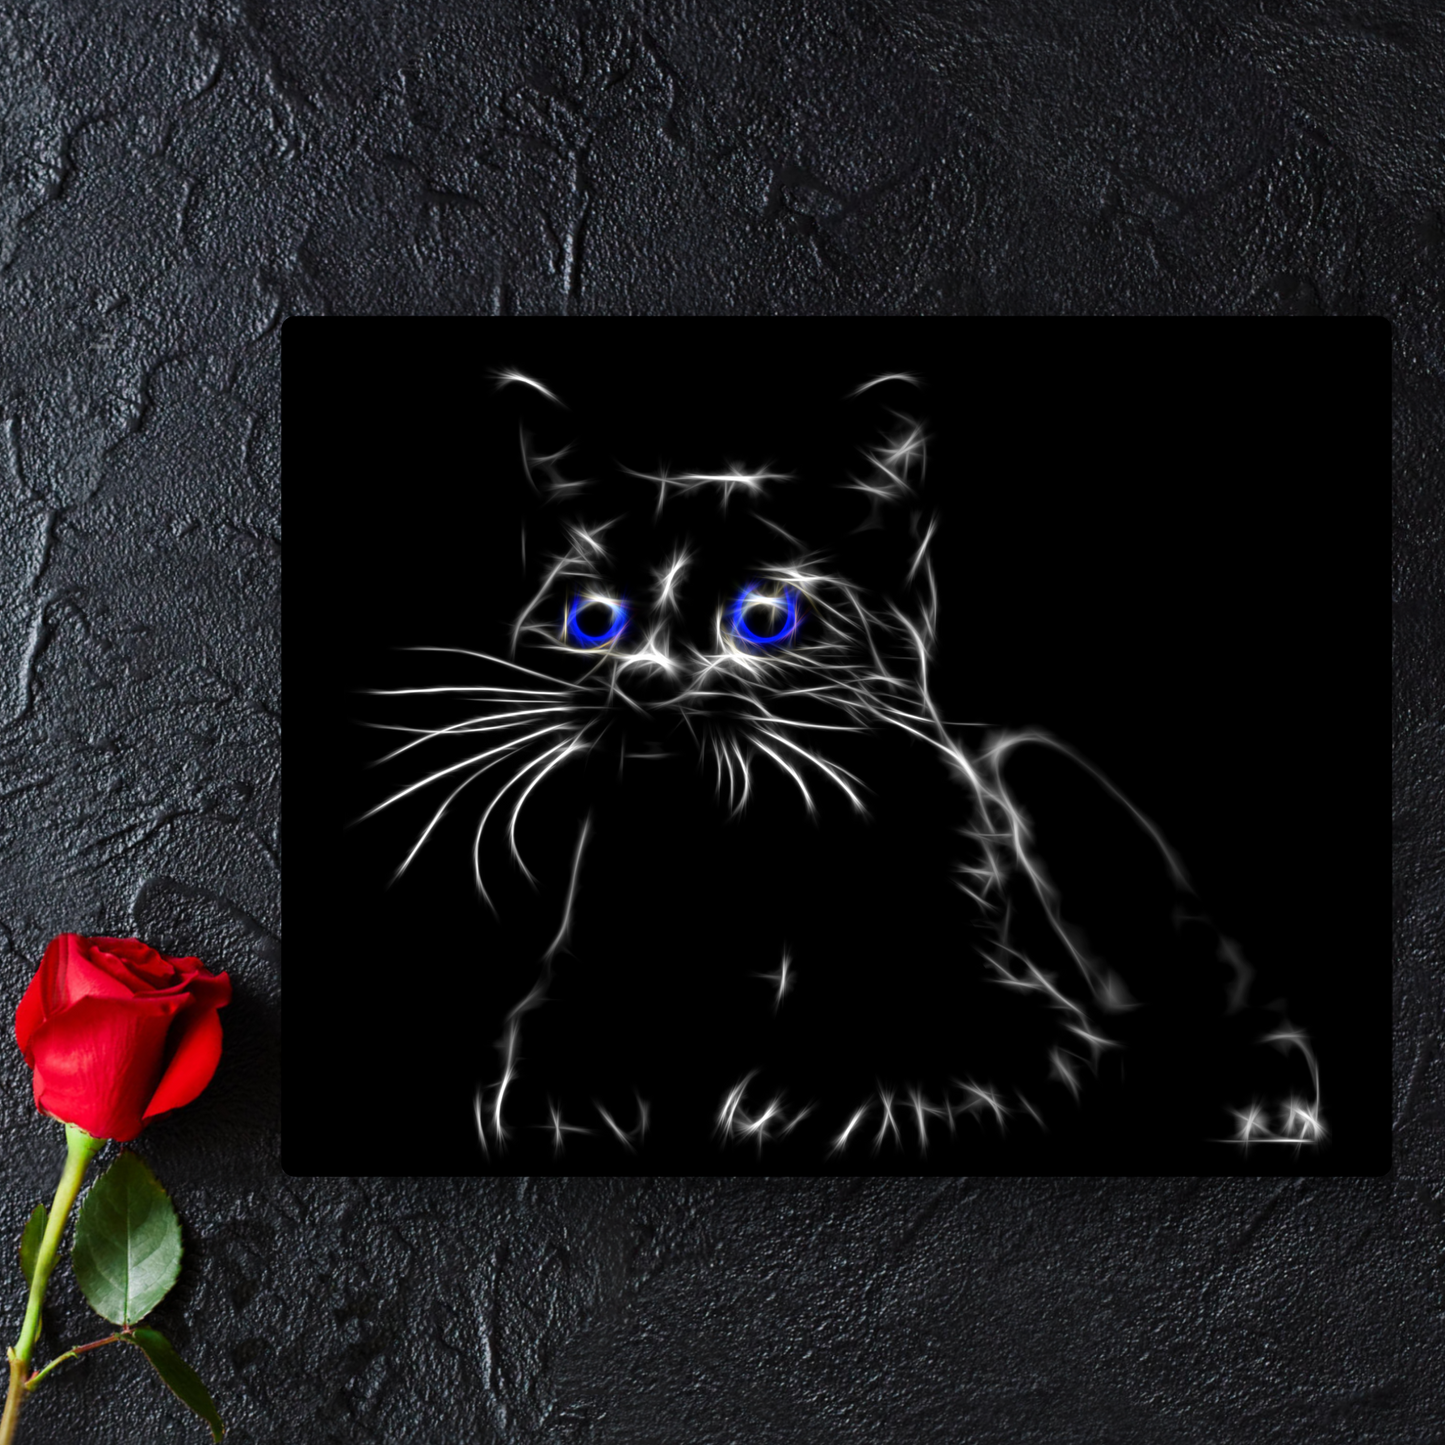 Blue Eye Black Cat Aluminium Metal Wall Plaque